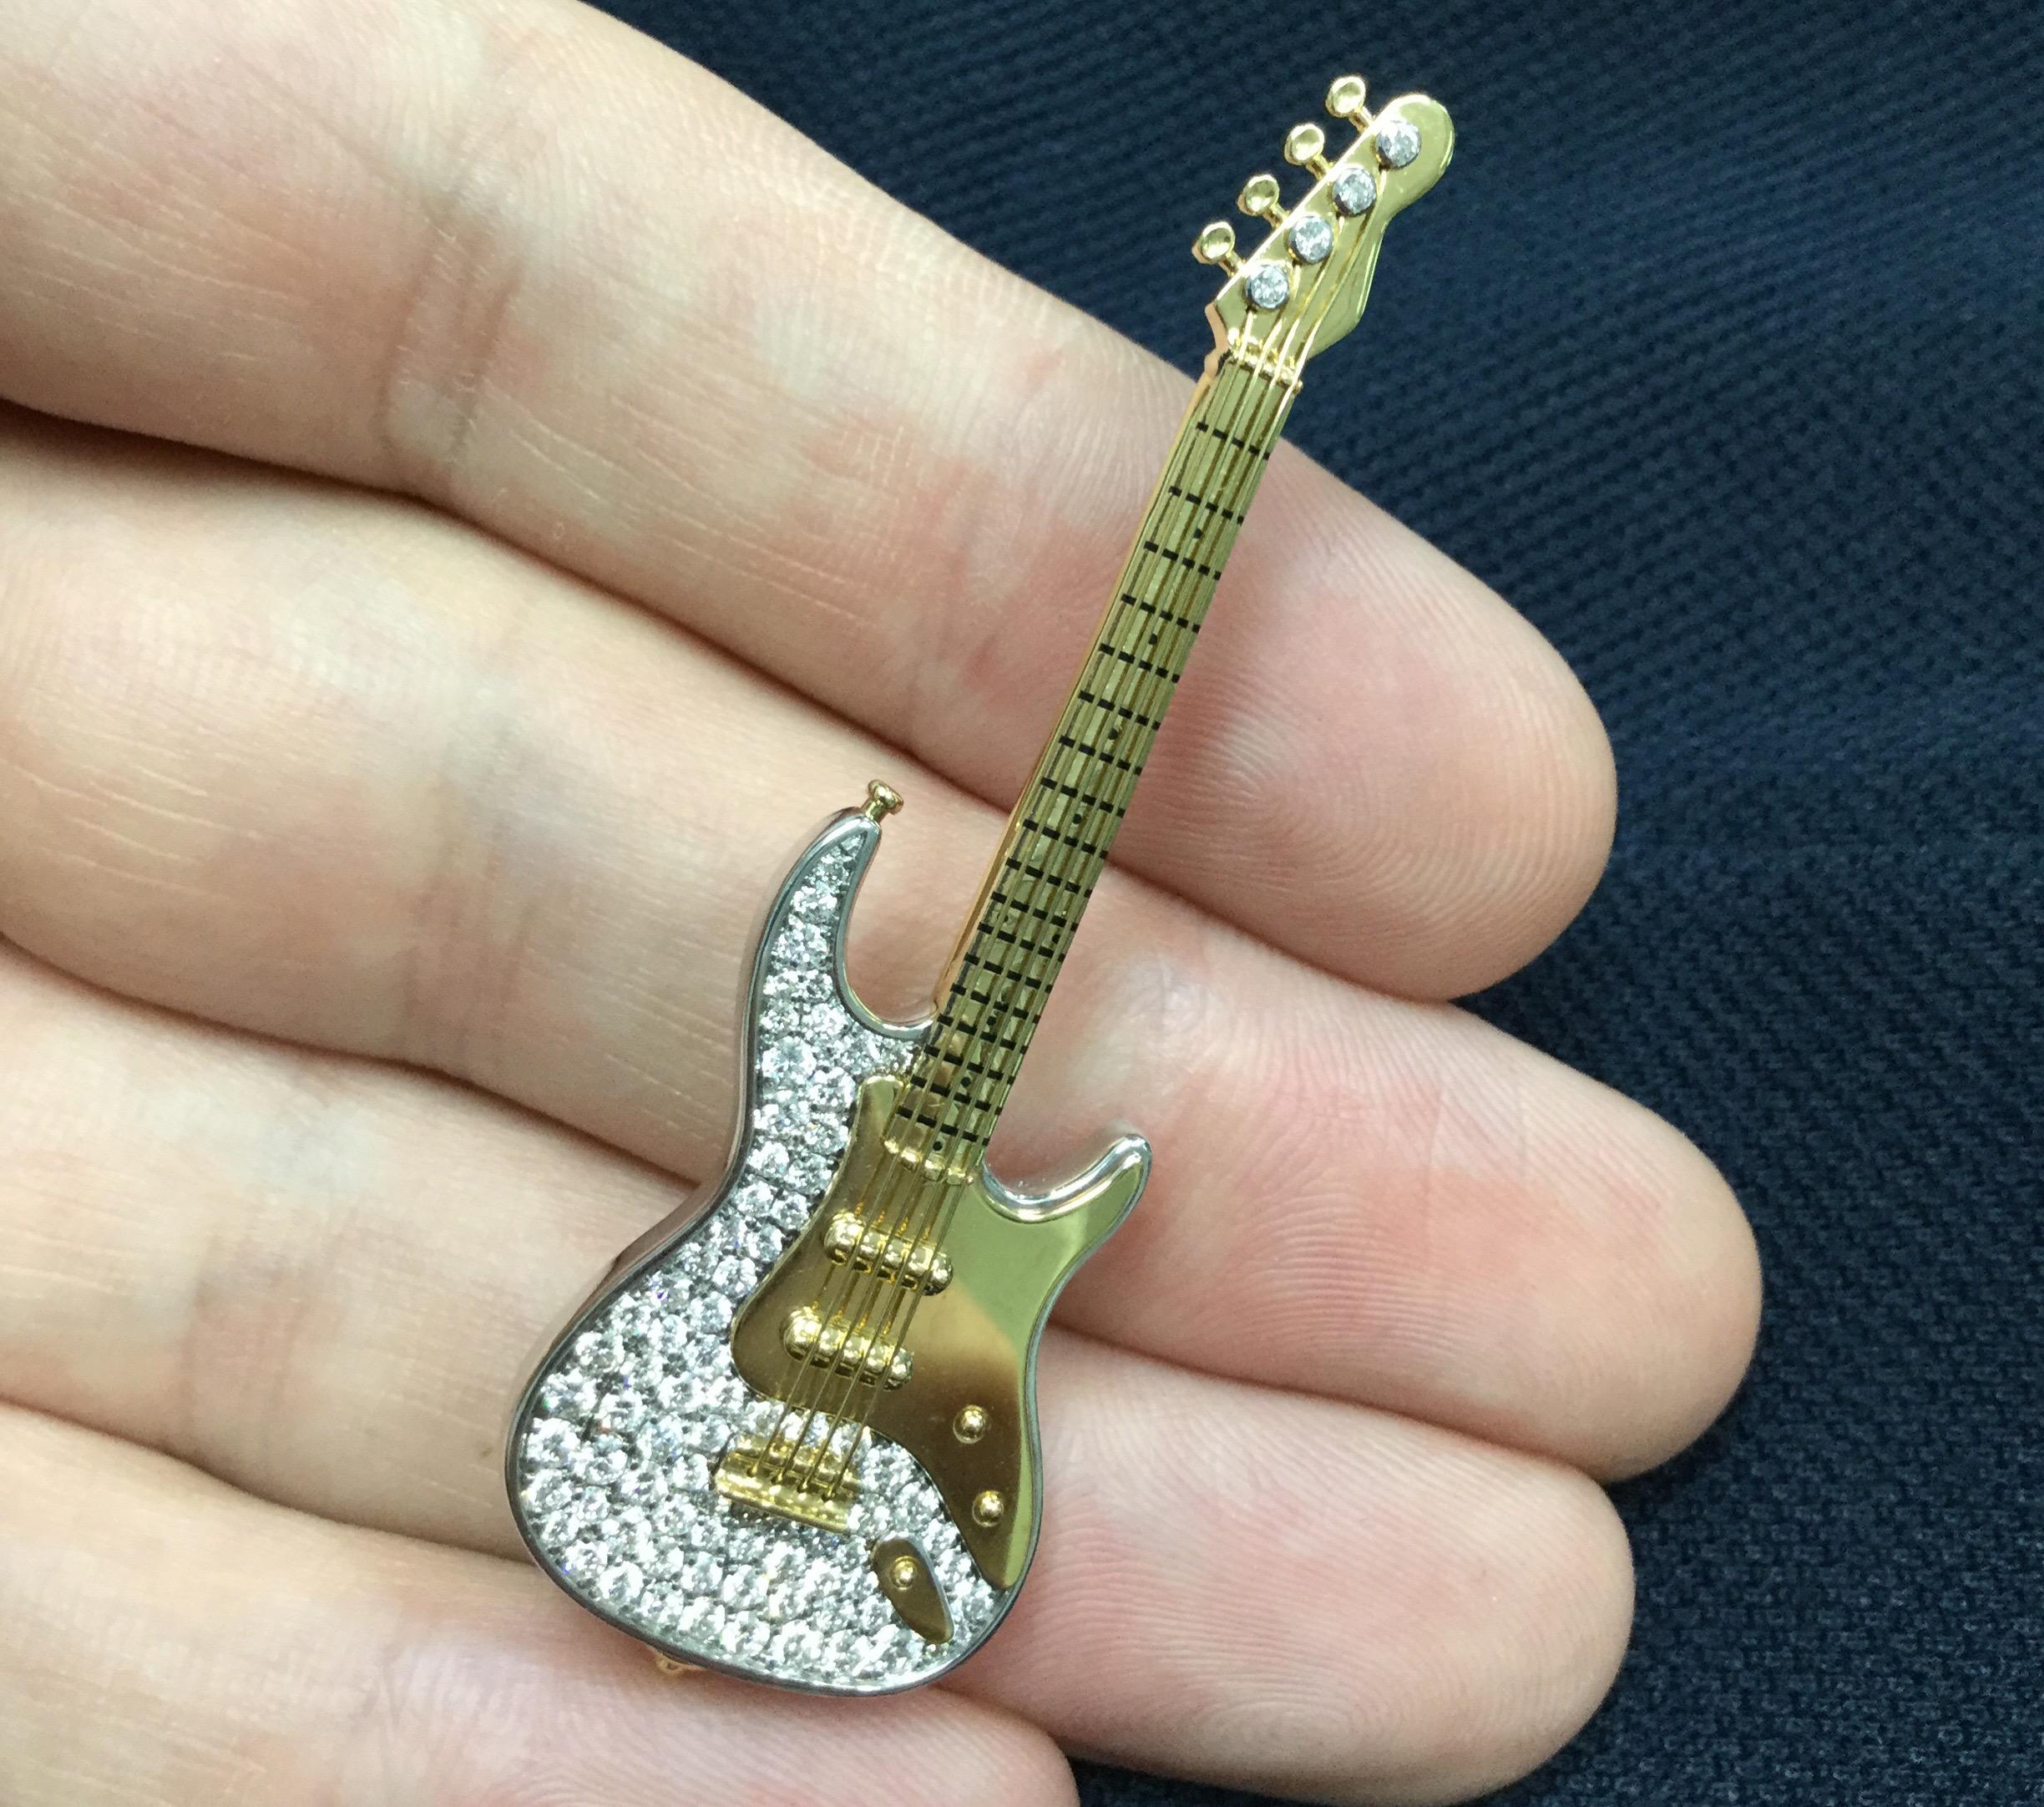 a diamond guitar